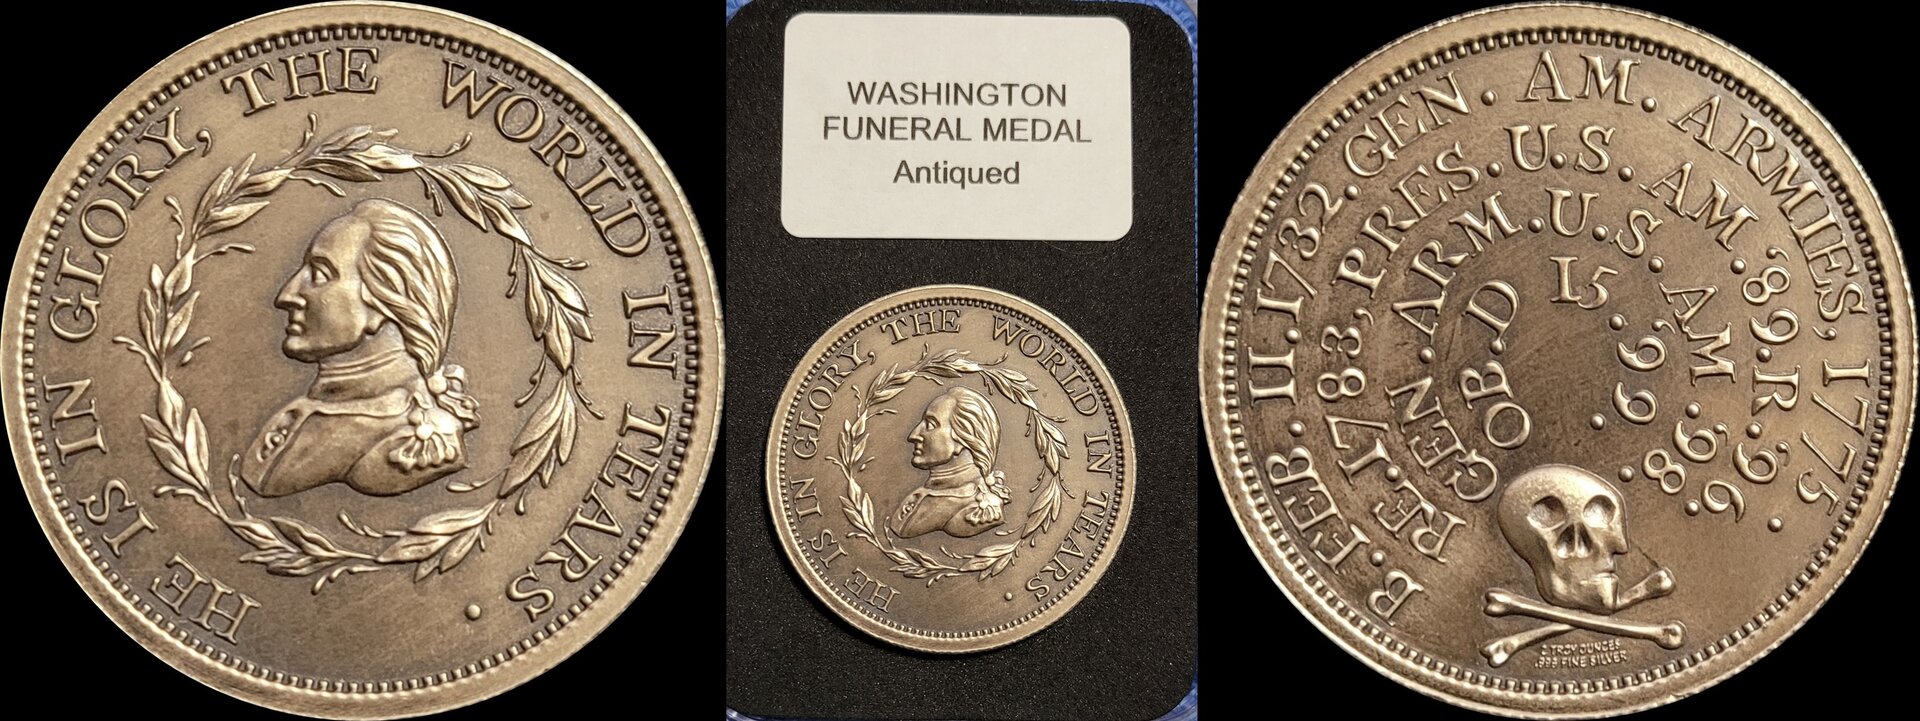 Intaglio Mint George Washington Funeral Medal 2 oz Silver Antiqued C.jpg